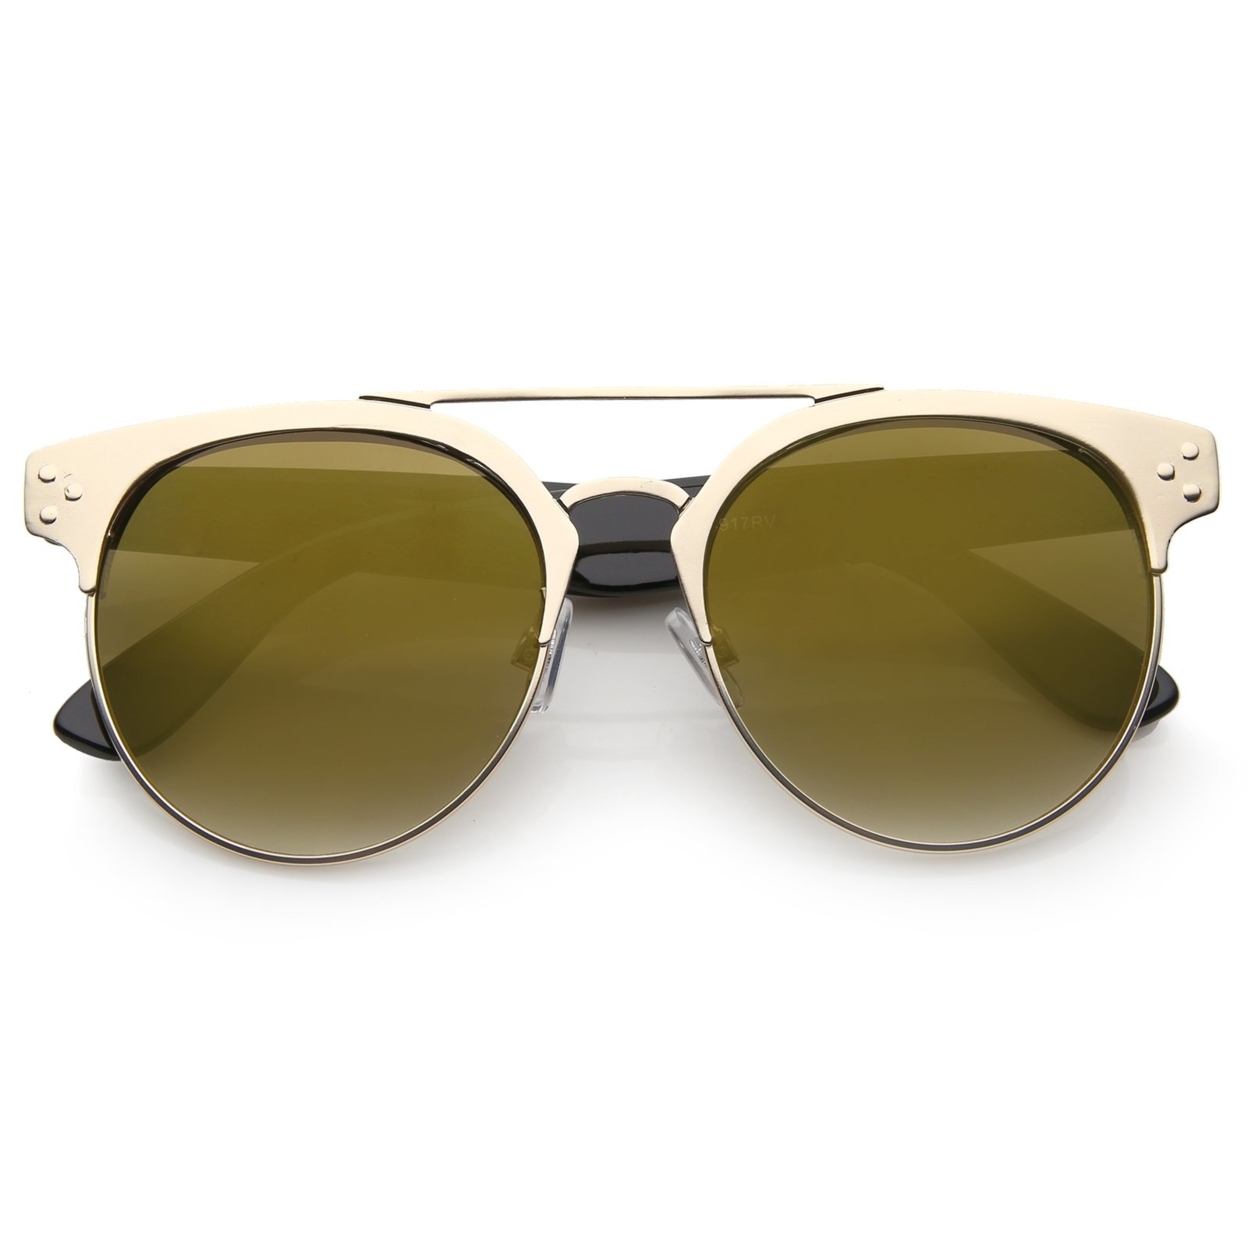 Modern Horn Rimmed Brow Bar Colored Mirror Round Aviator Sunglasses 54mm - Gold-Tortoise / Blue Mirror